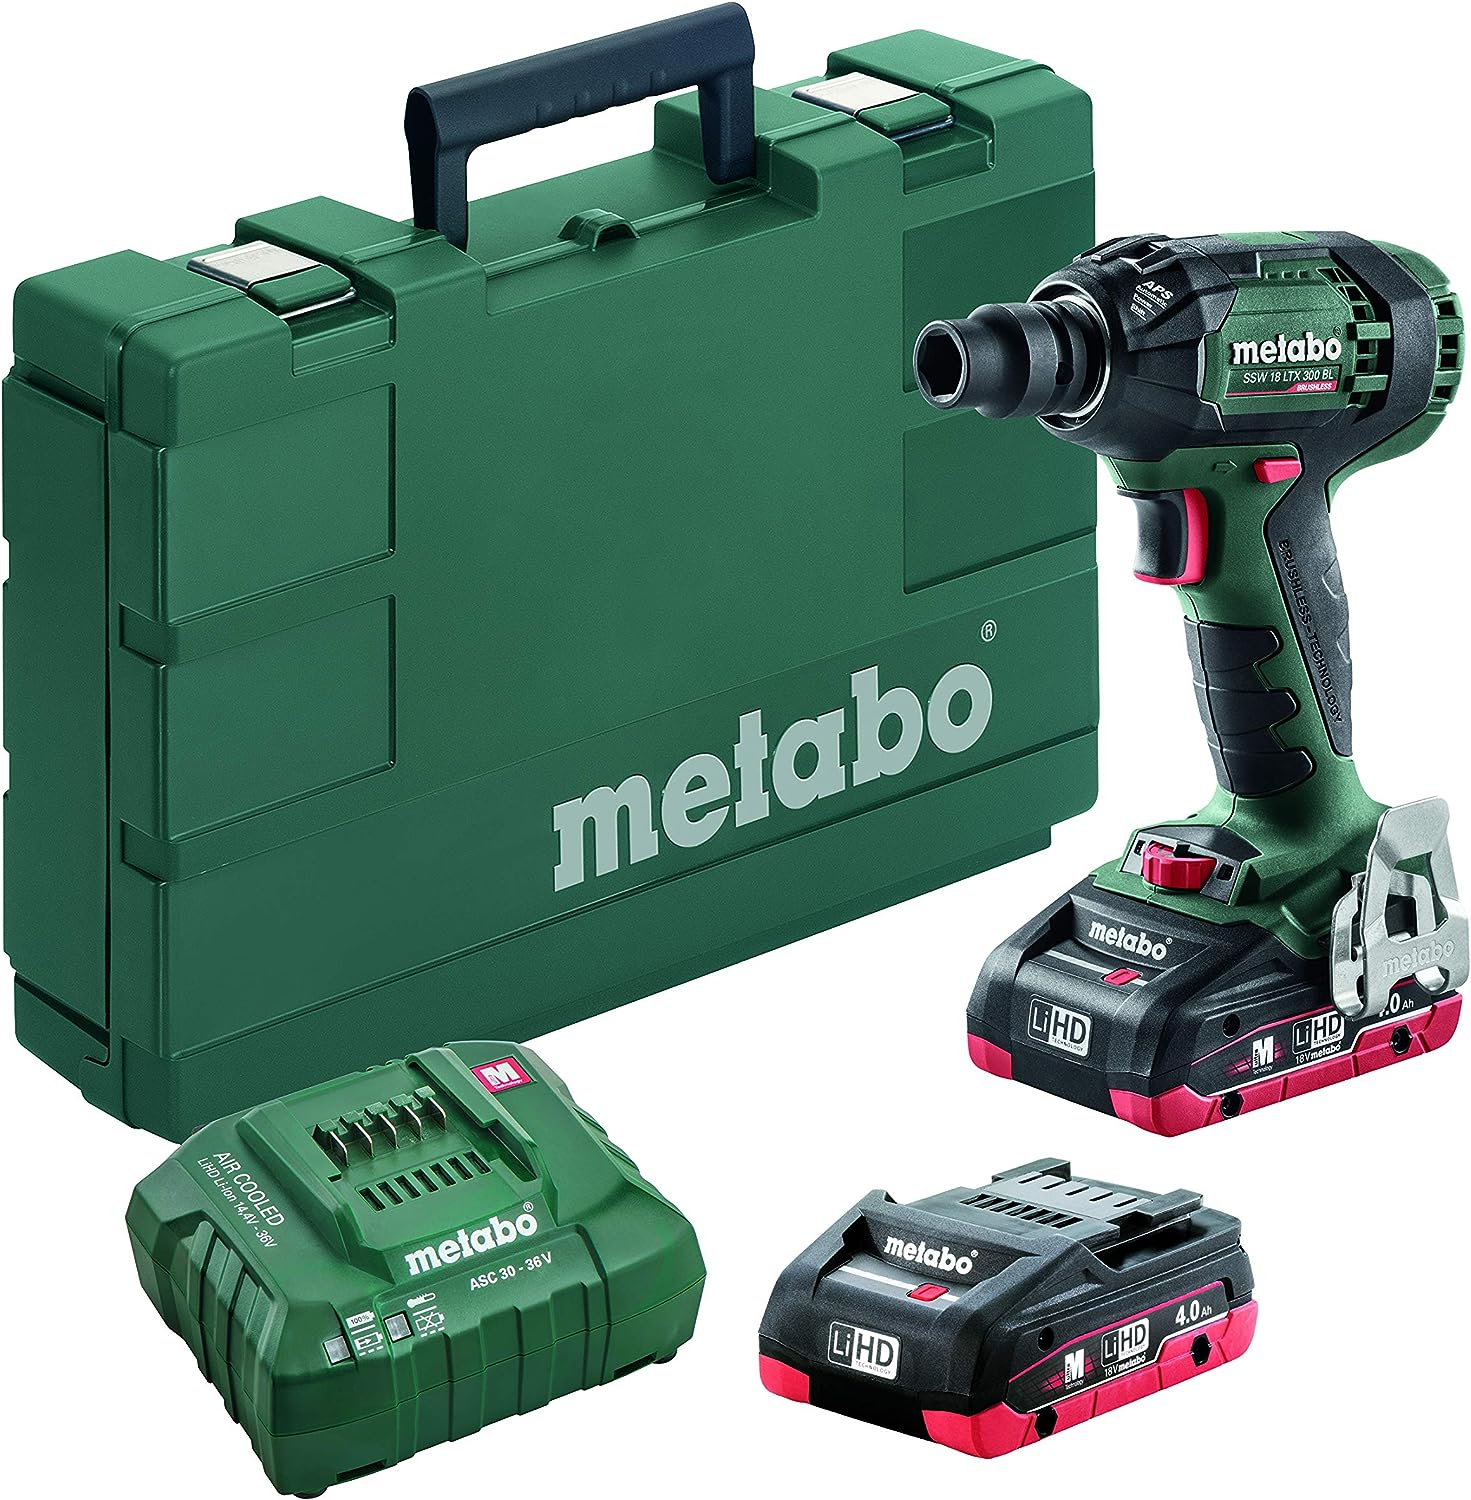 Metabo - 18V 1/2" Sq. Impact Wrench Kit 2X 4.0Ah Lihd (602395520 18 LTX 300 BL 4.0), Impact Drivers & Impact Wrenches